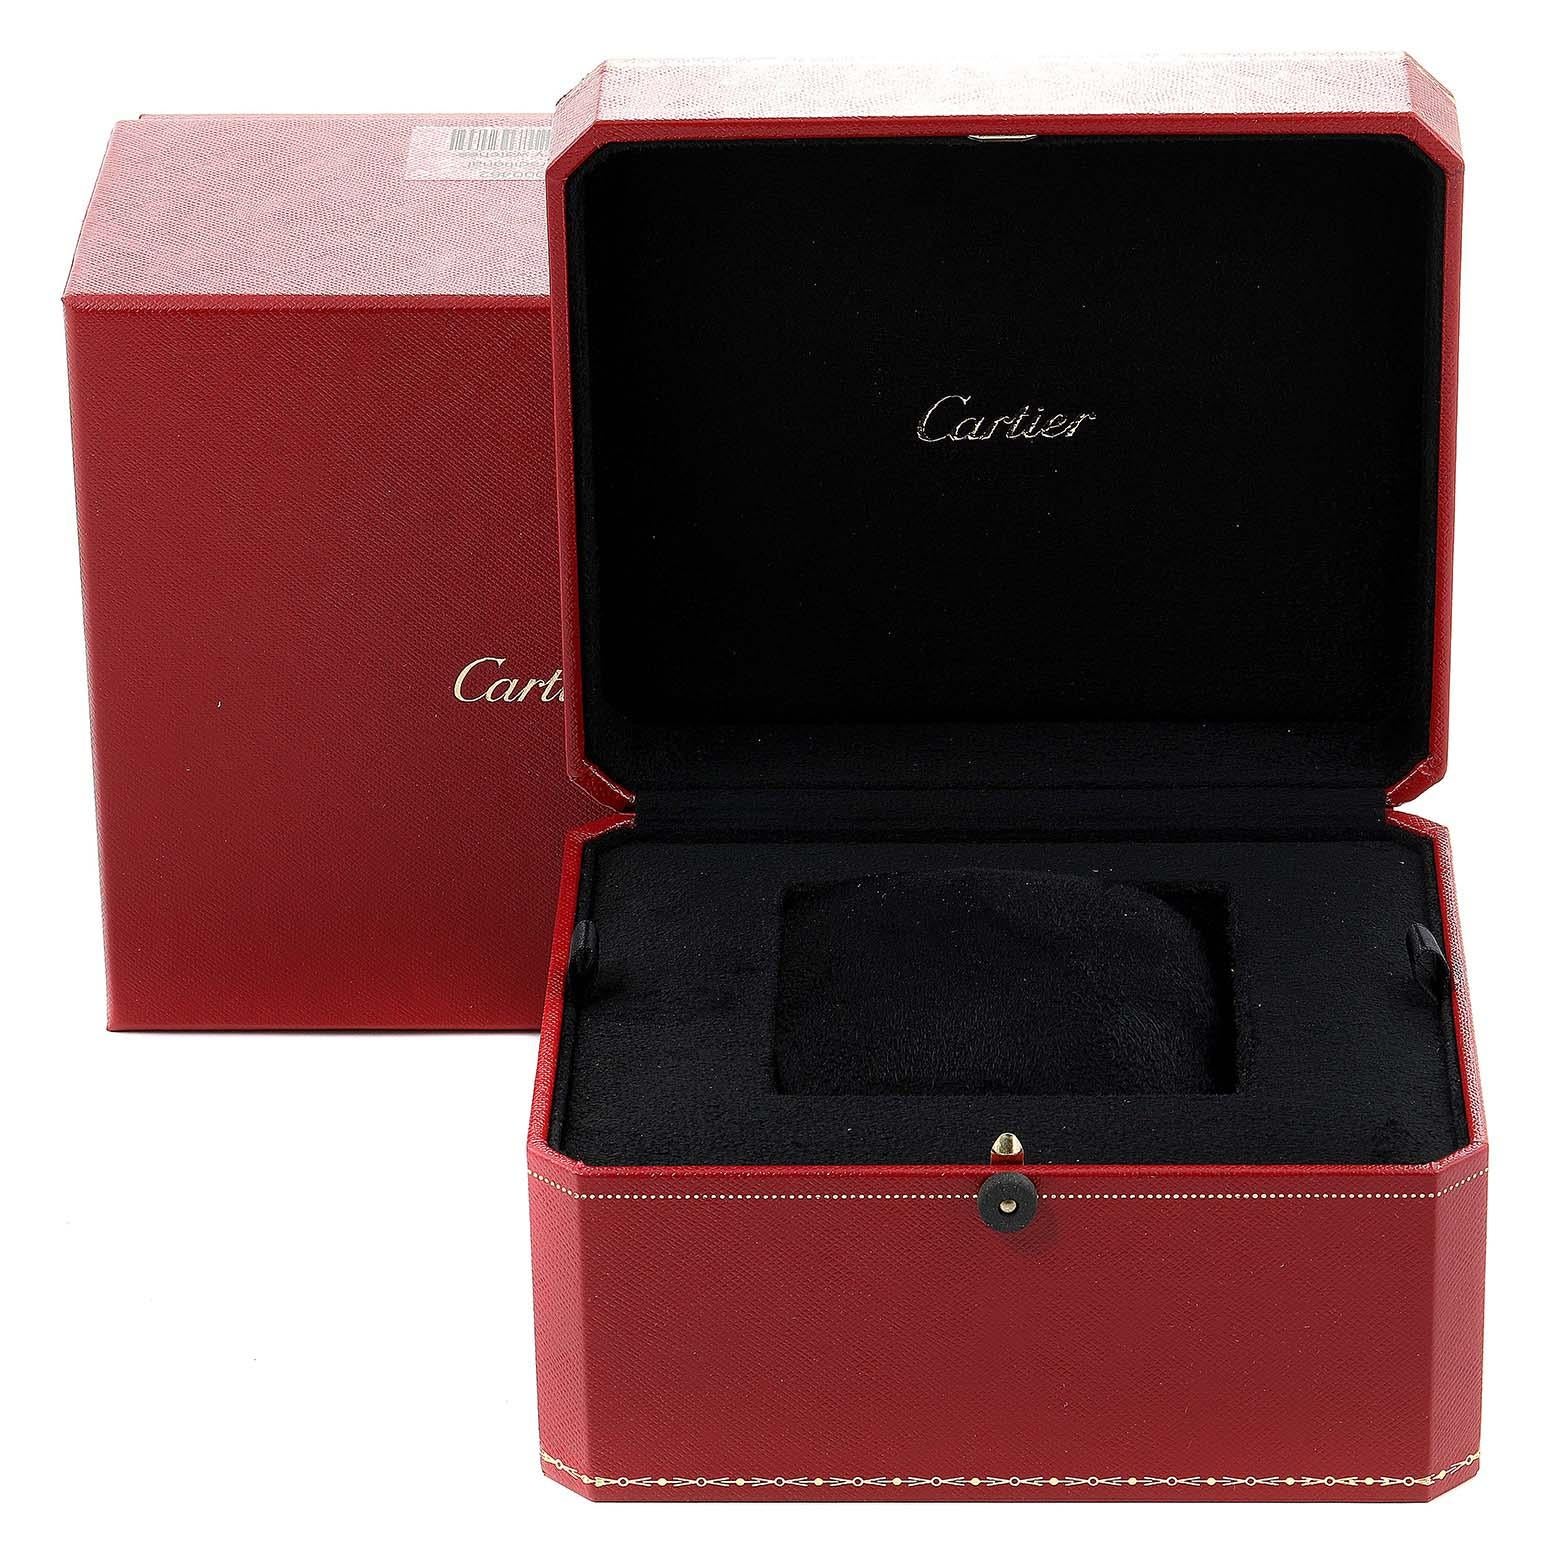 Cartier Tank Francaise Chrongraph White Gold Diamond Men's Watch 2367 For Sale 4